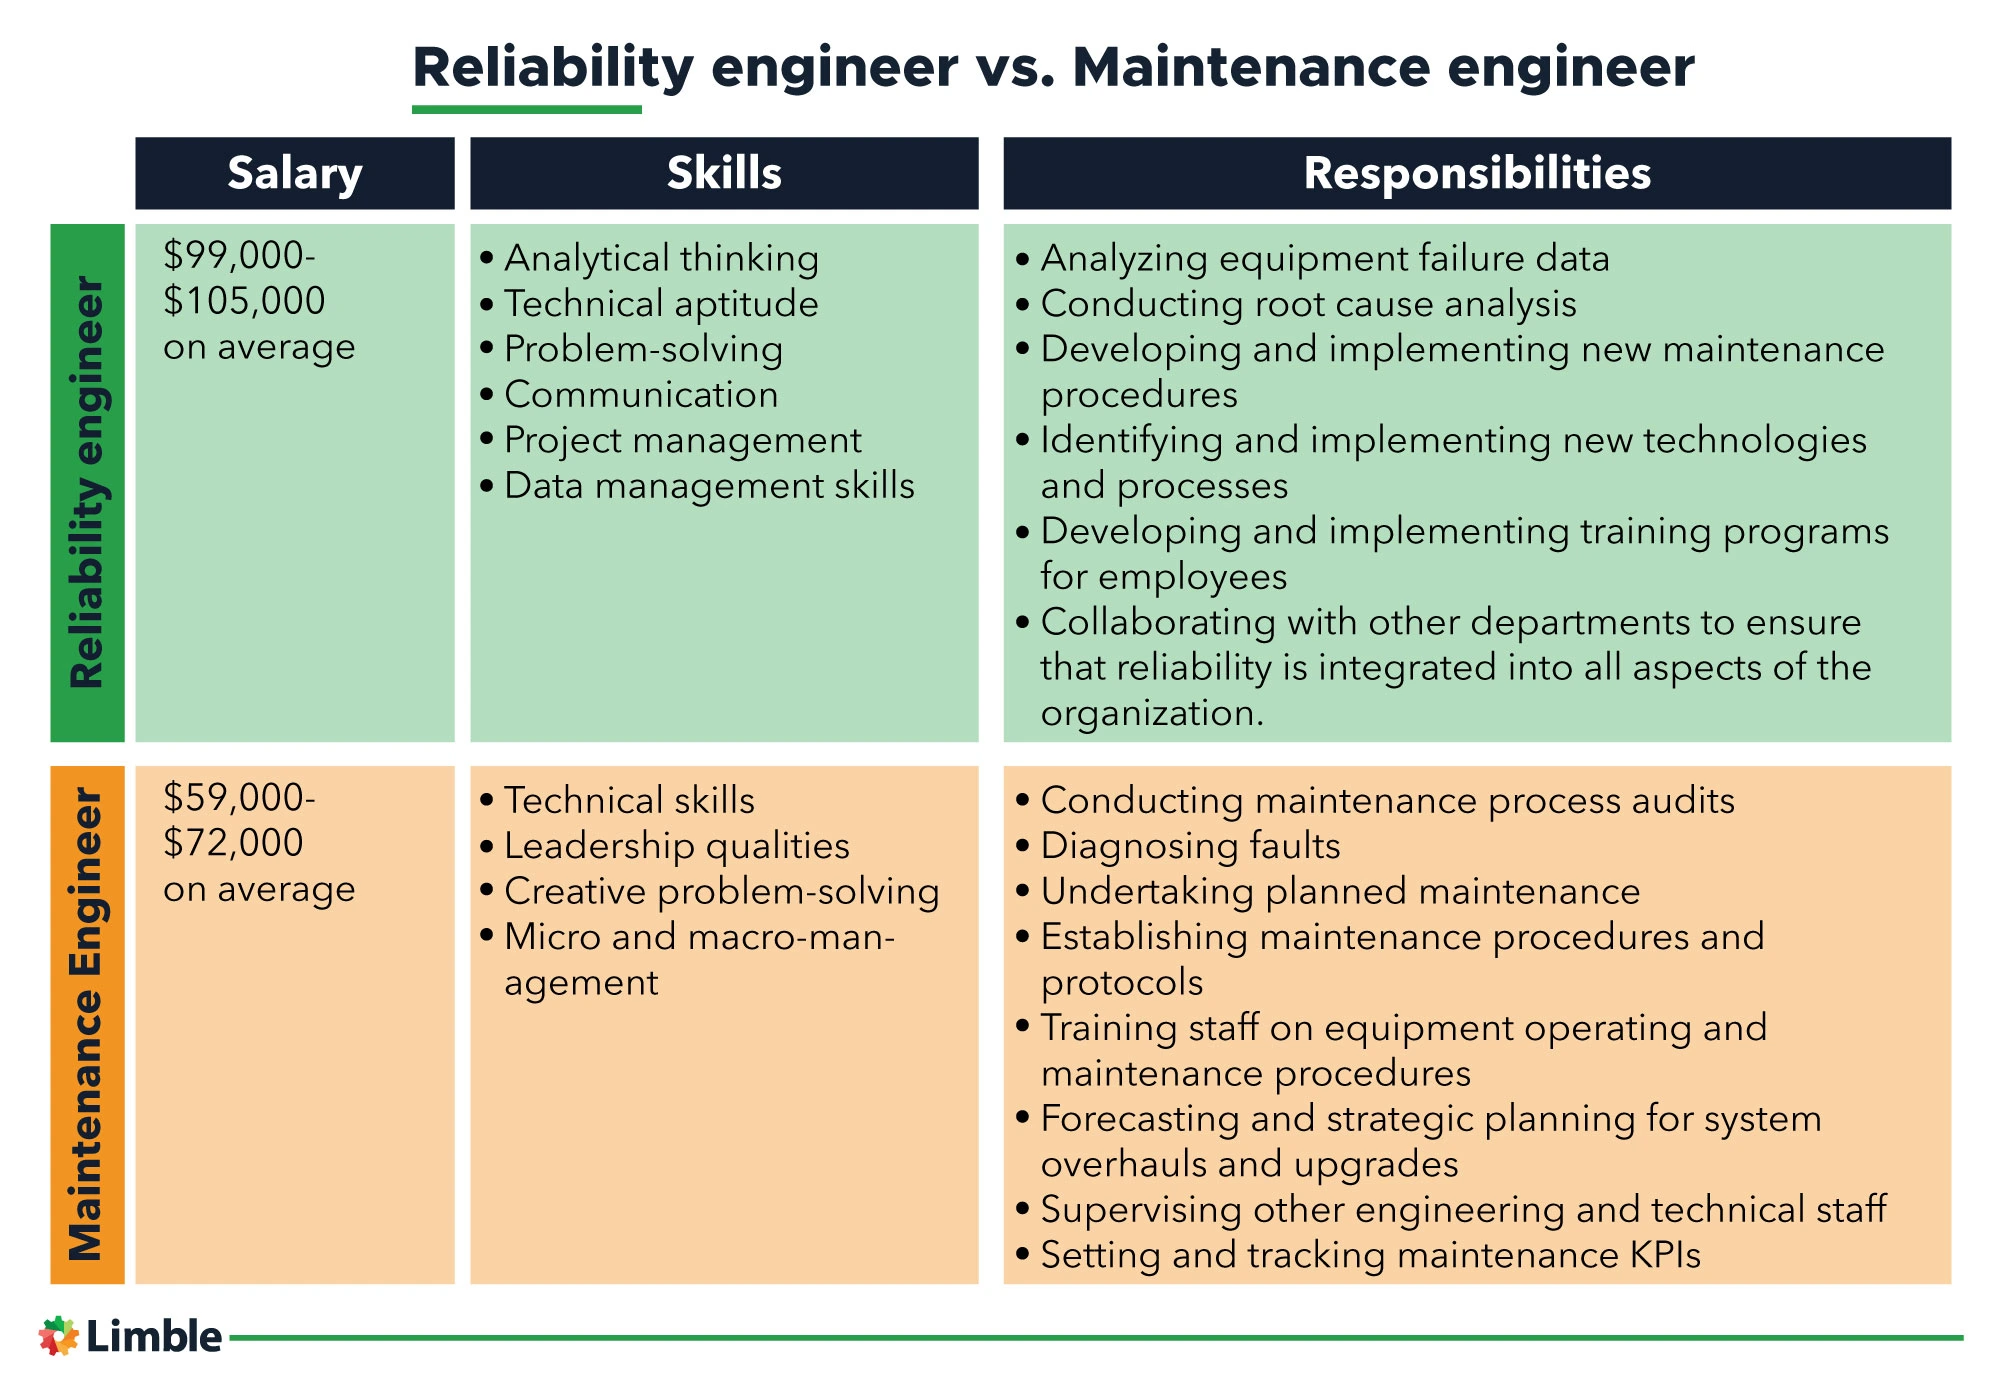 Reliability engineer vs. maintenance engineer.